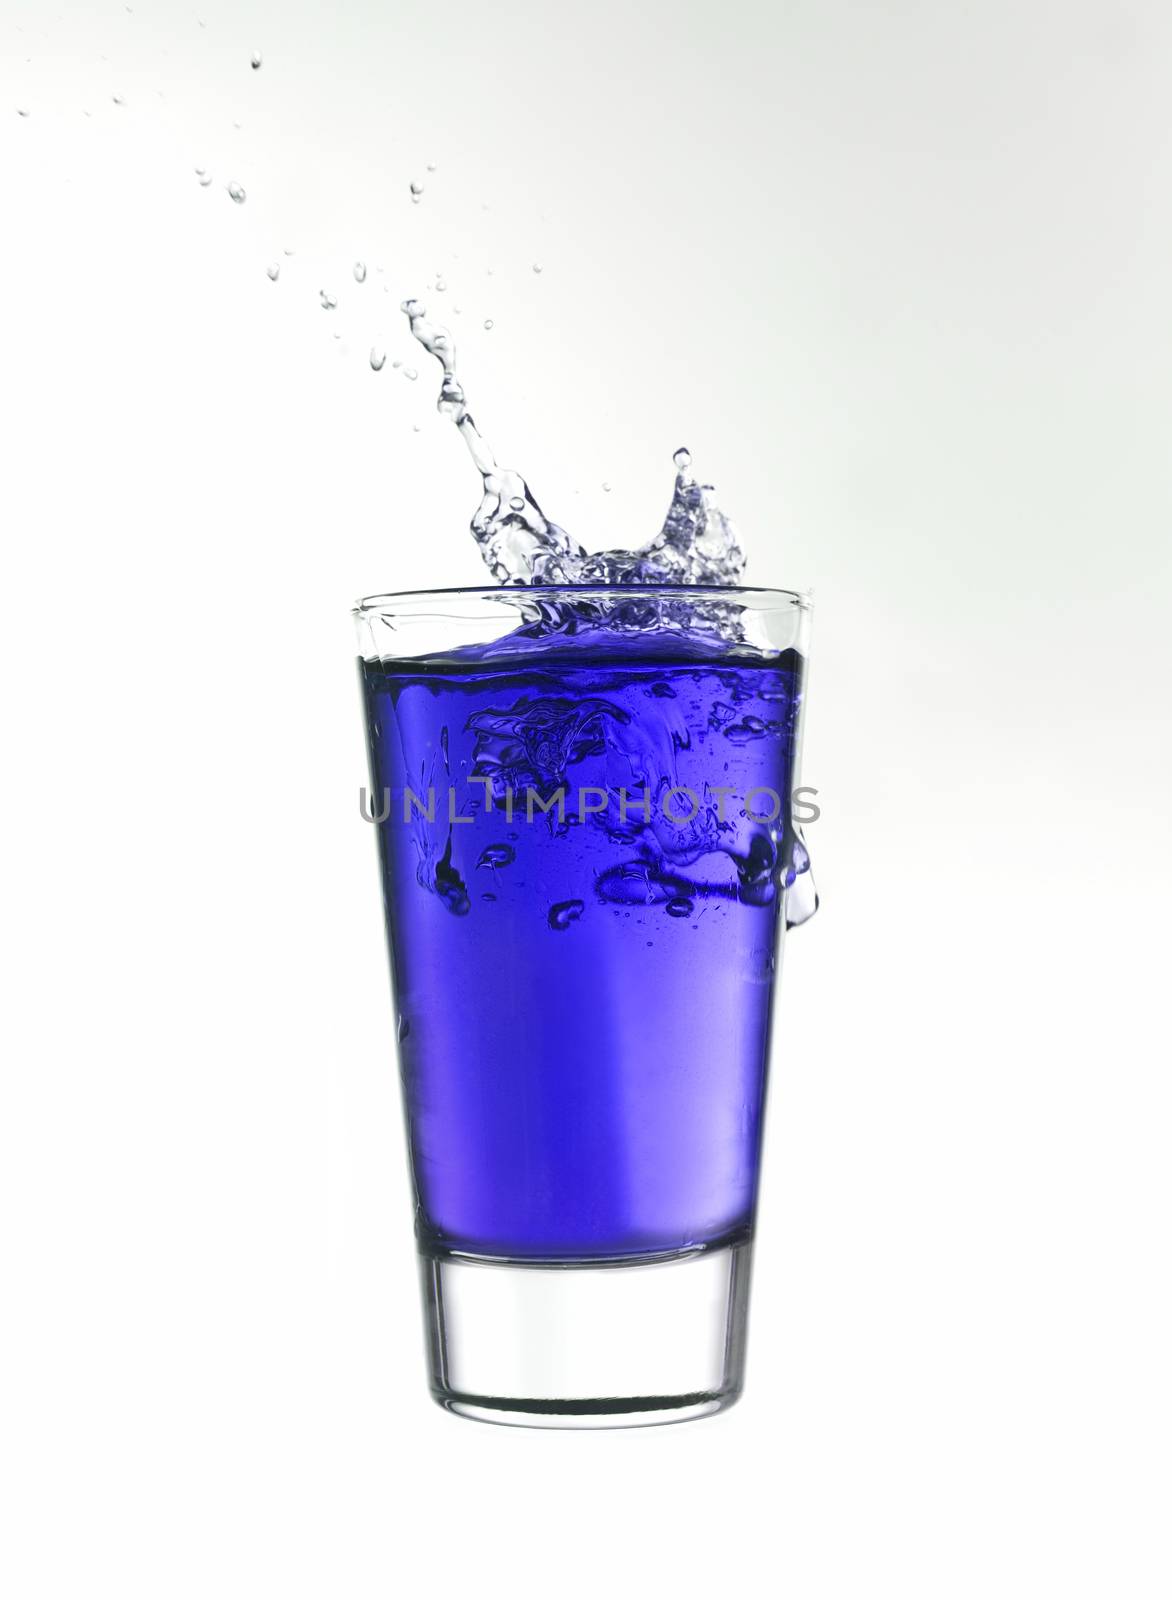 Splash in a glass of blue lemonade by gemenacom